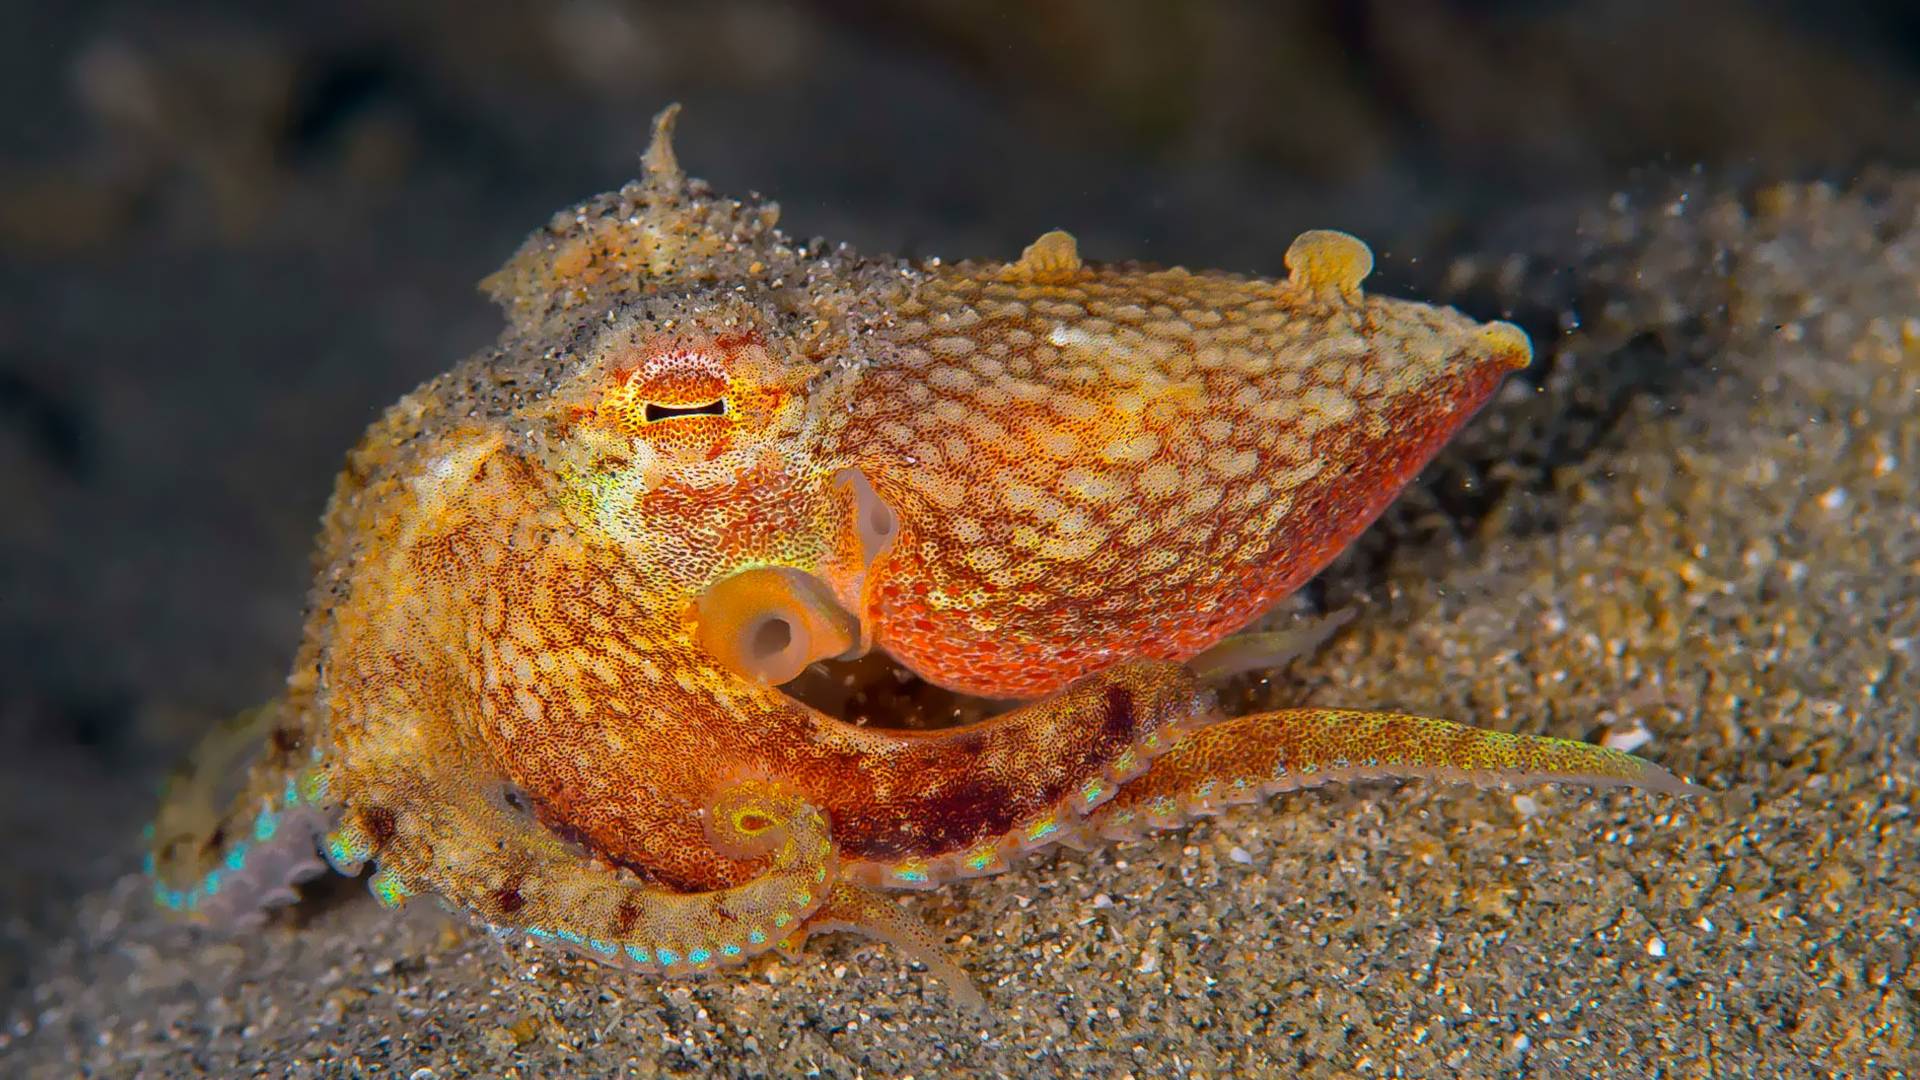 Octopus in the Indian Ocean by Dhritiman Mukherjee